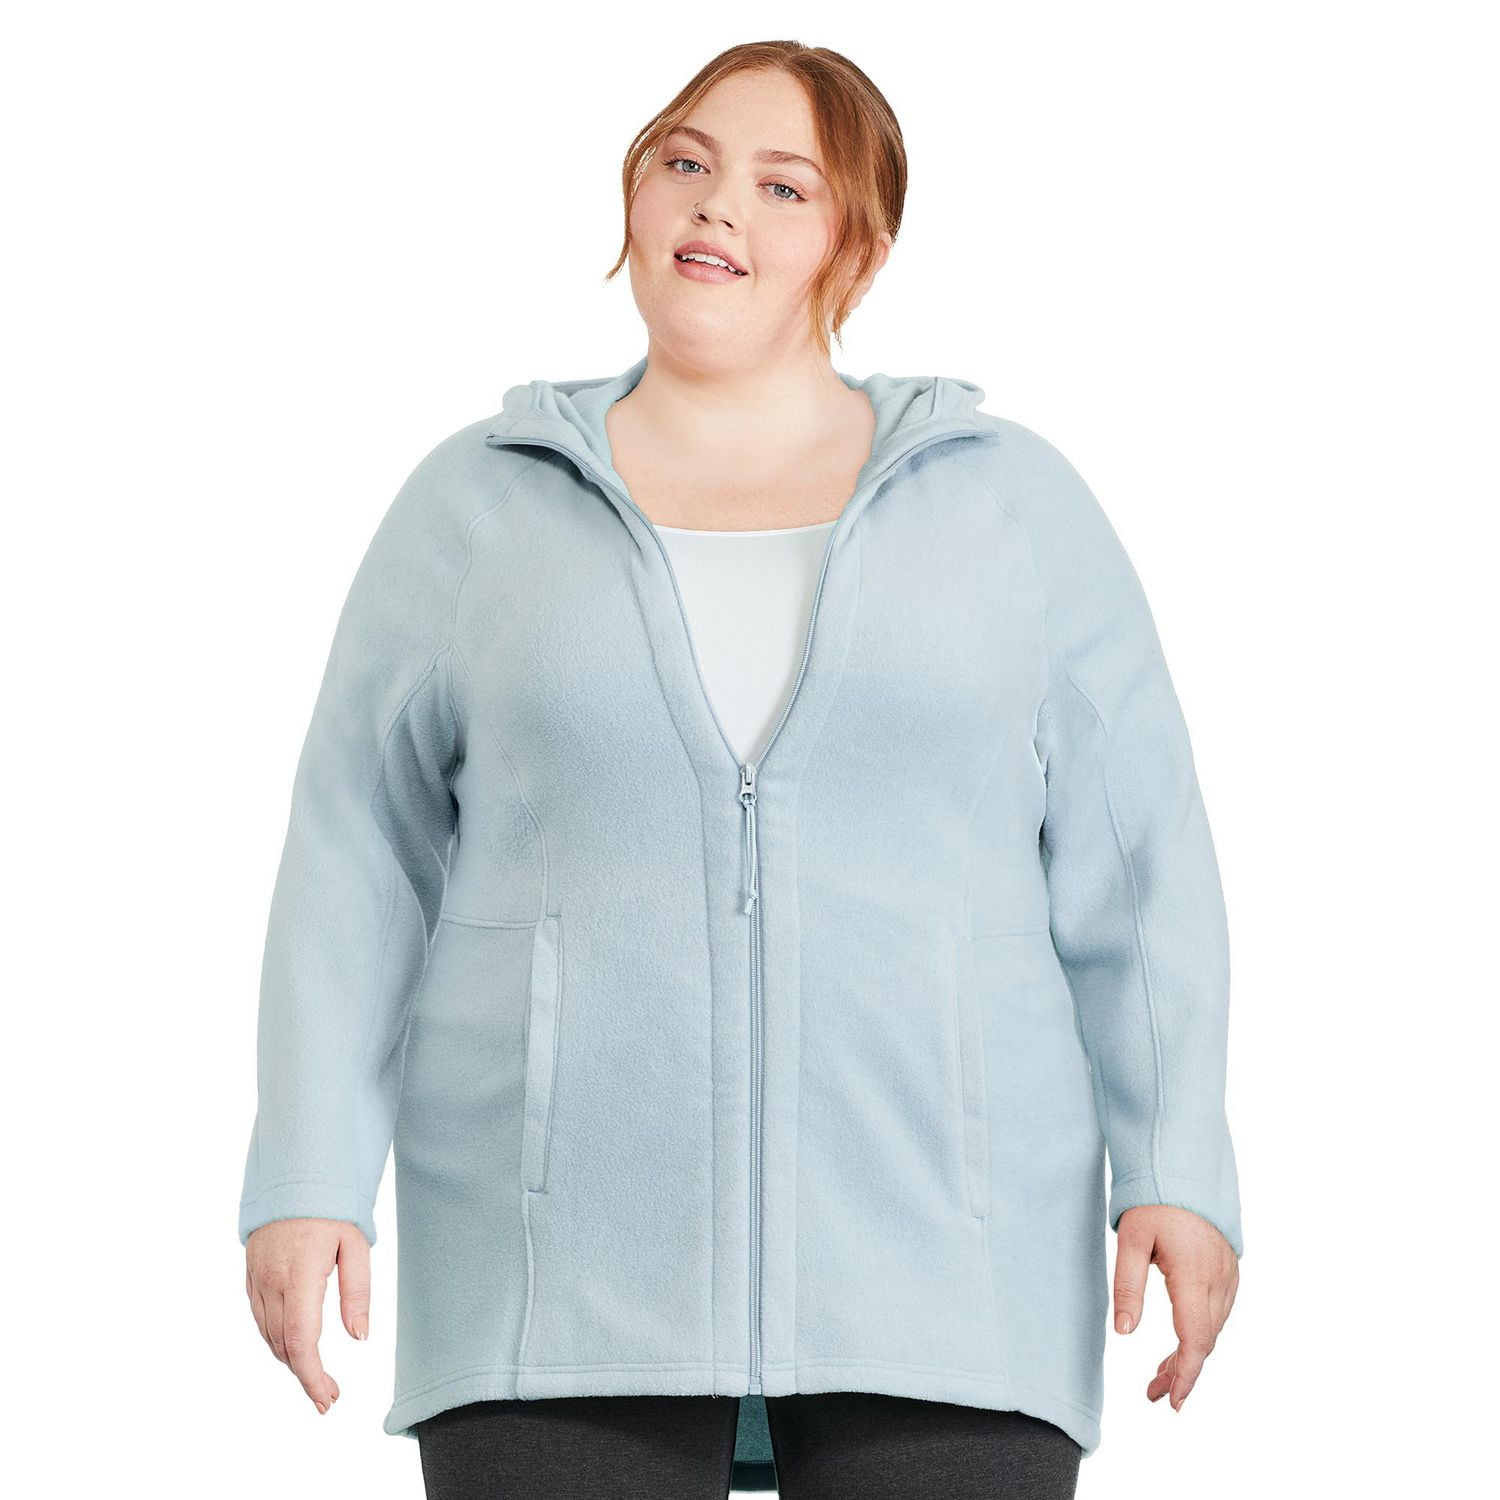 12 Wholesale Sofra Ladies Polar Fleece Jacket Size L